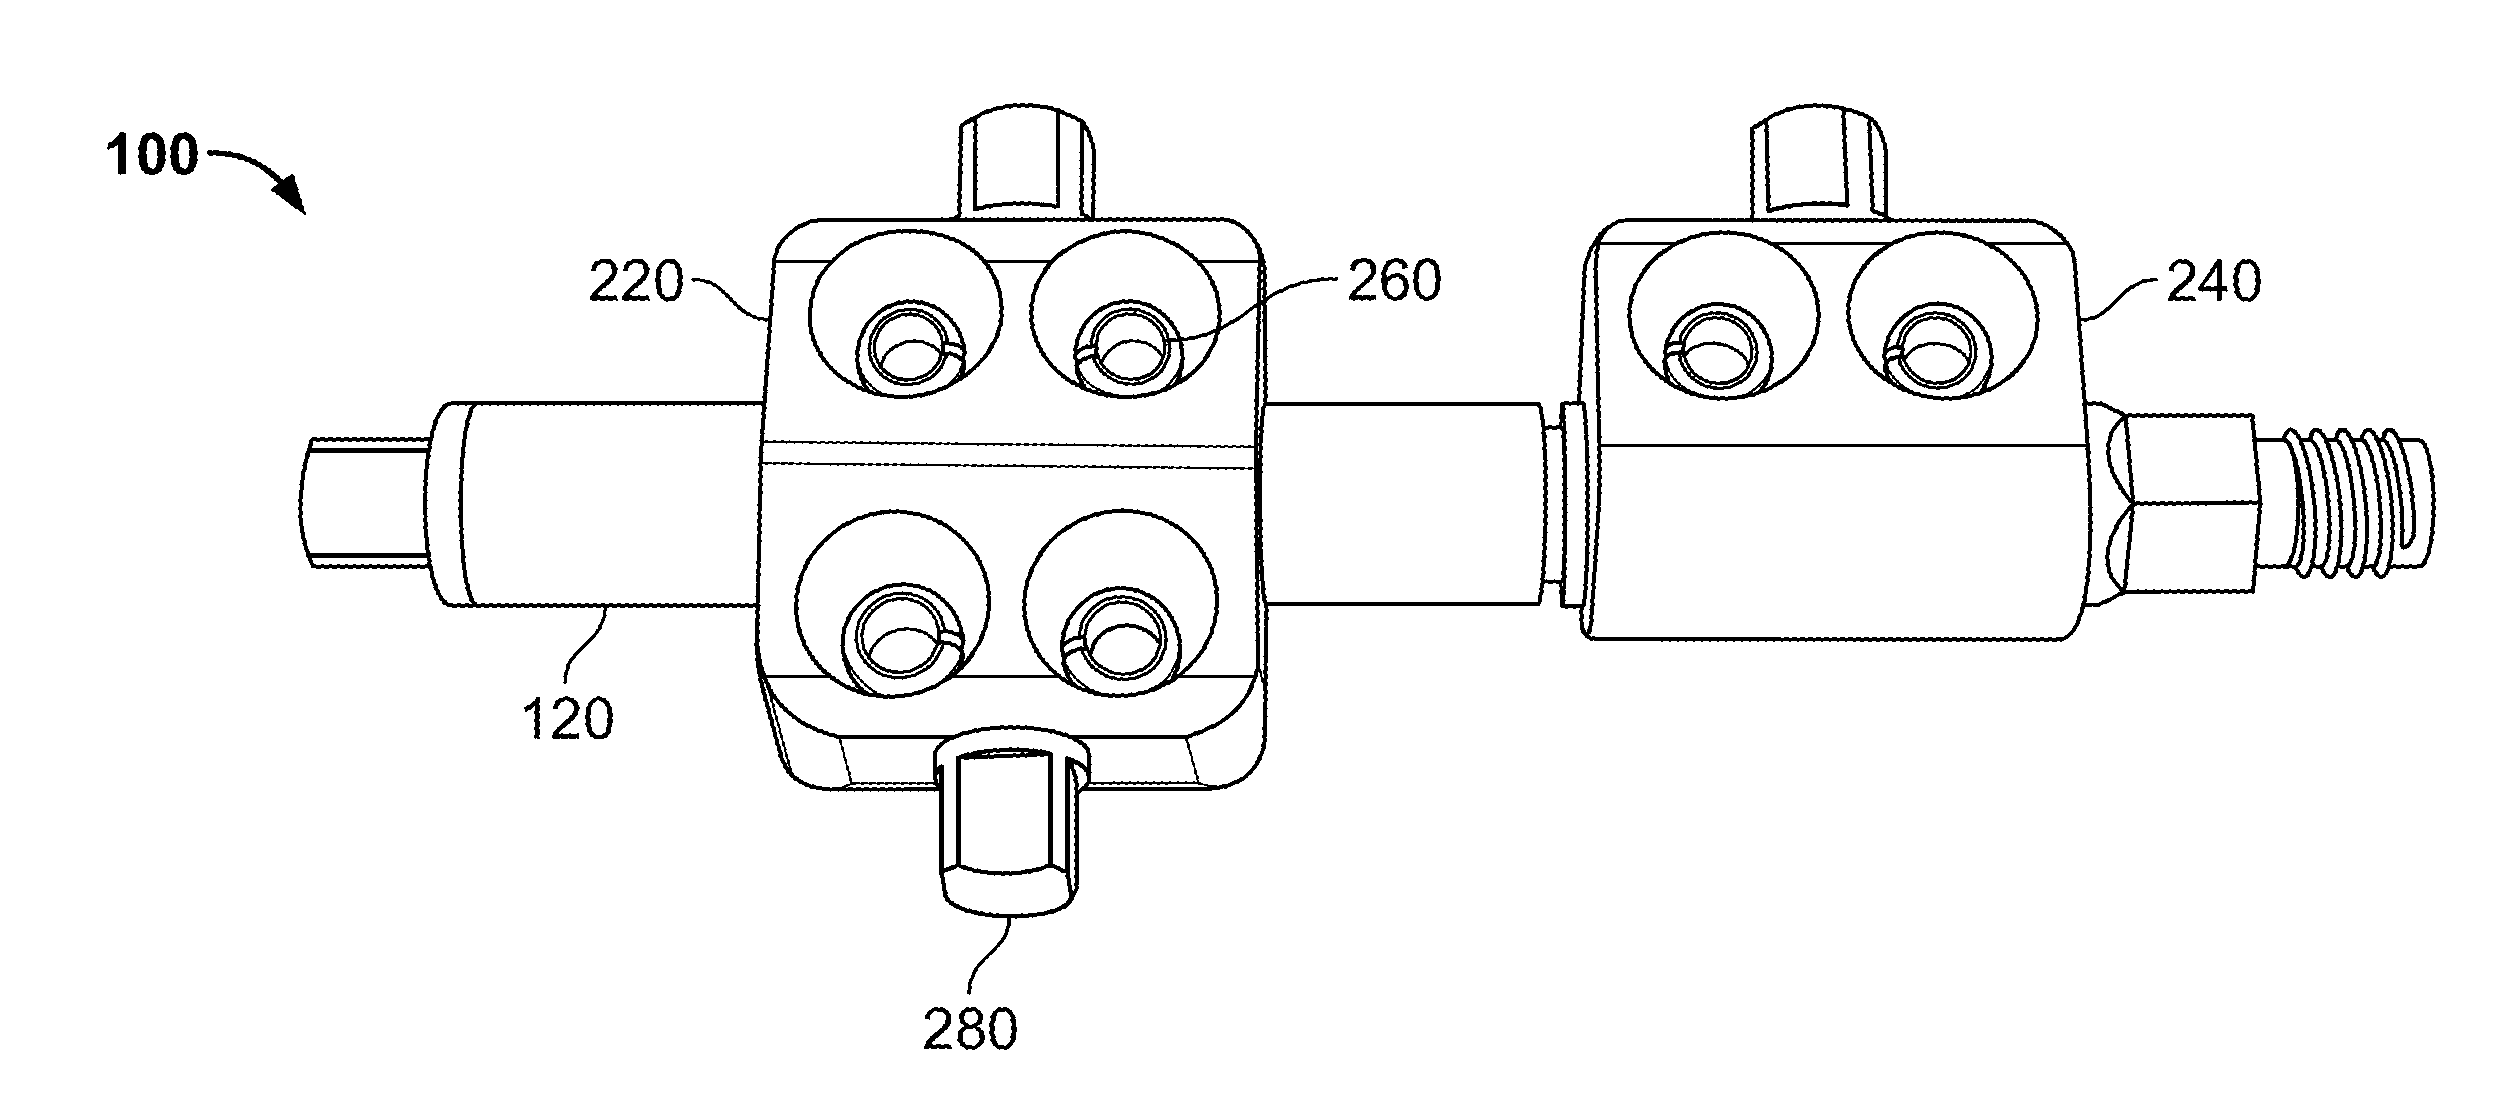 Mini-rail external fixator